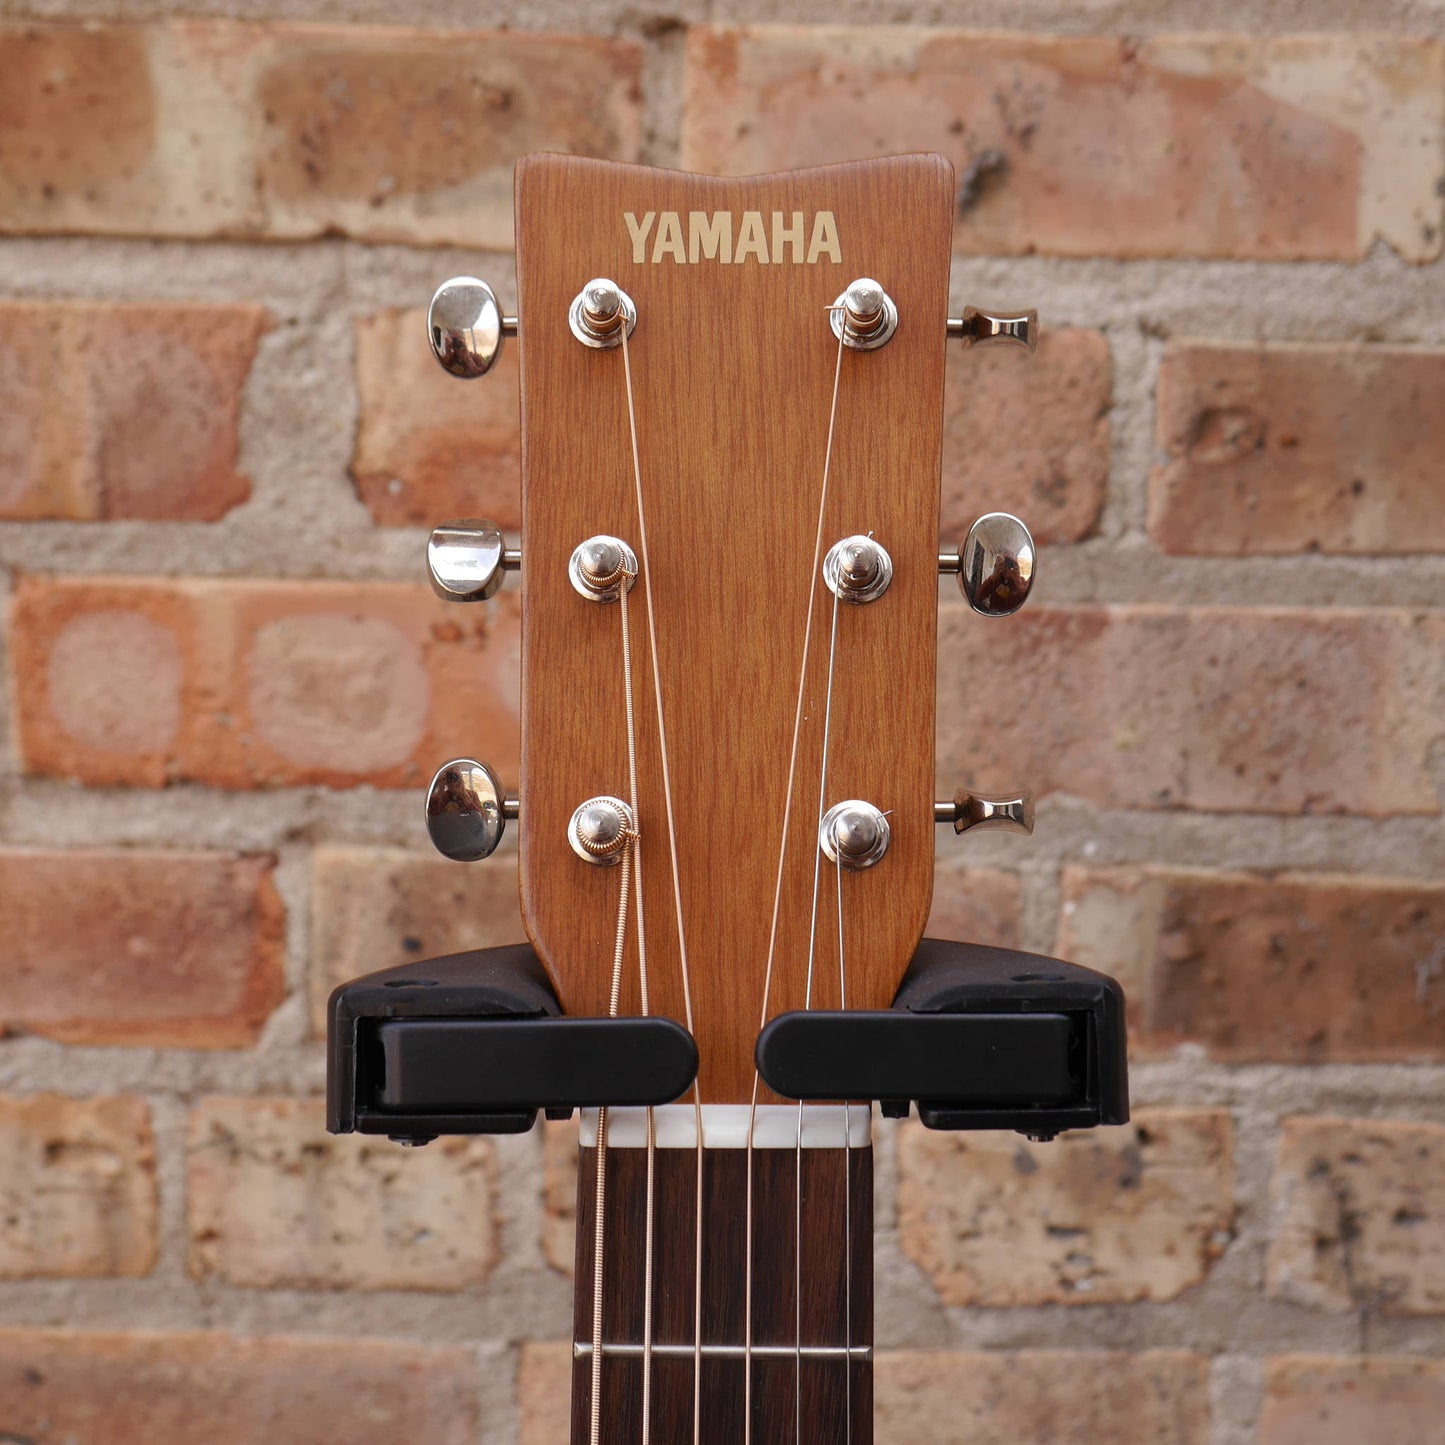 Yamaha FG-Junior JR-1 Student Acoustic Guitar w/Gig Bag